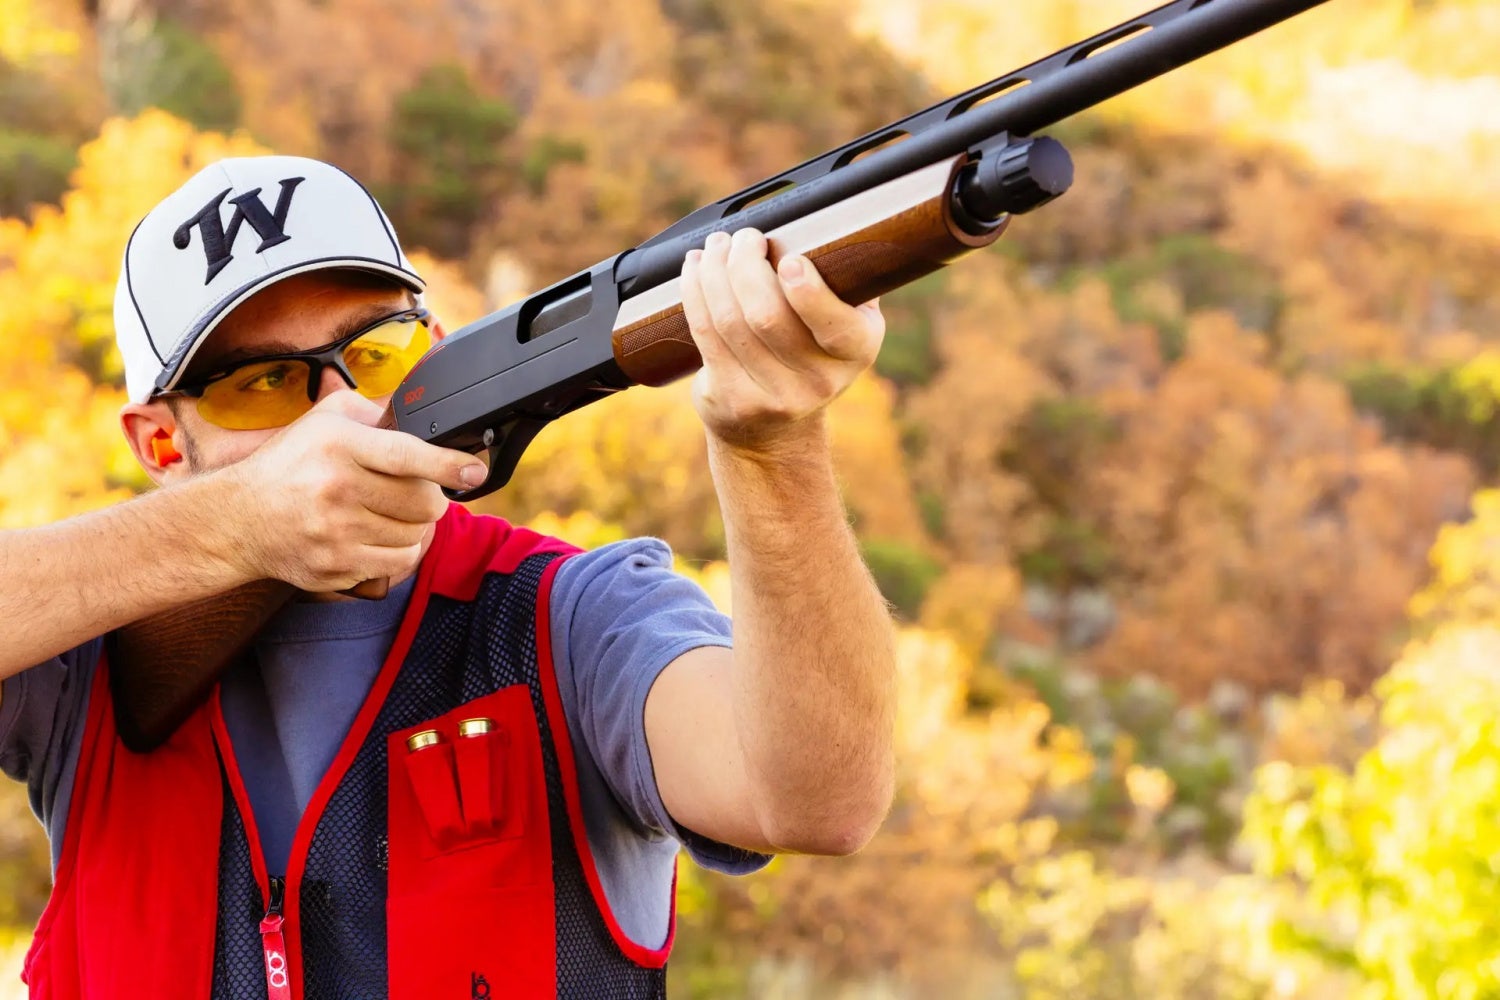 TFB Weekly Web Deals 8: Shotguns for Clay Pigeon Shooting